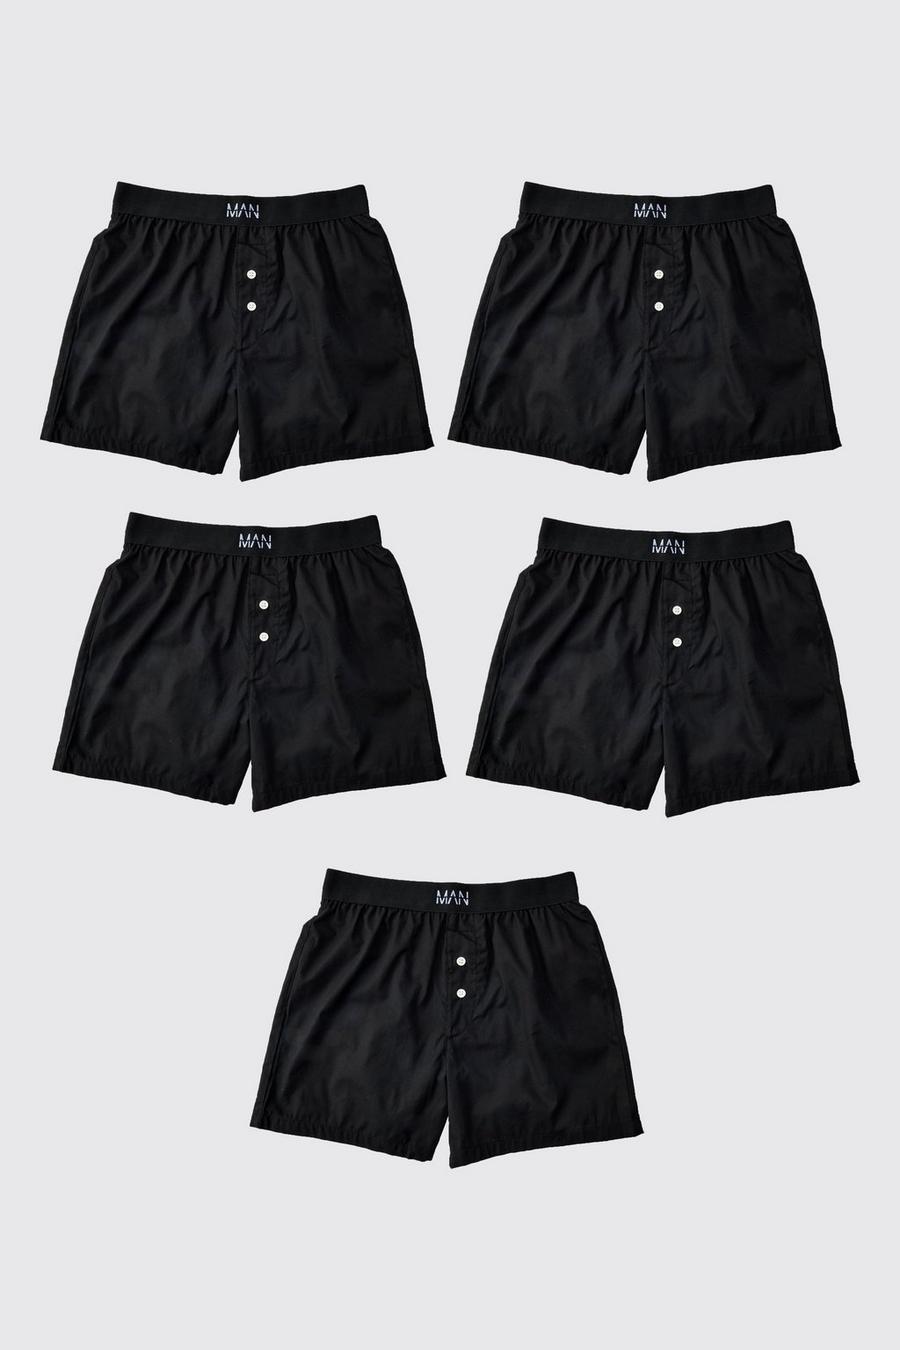 Black 5 Pack Original Man Woven Boxer Shorts